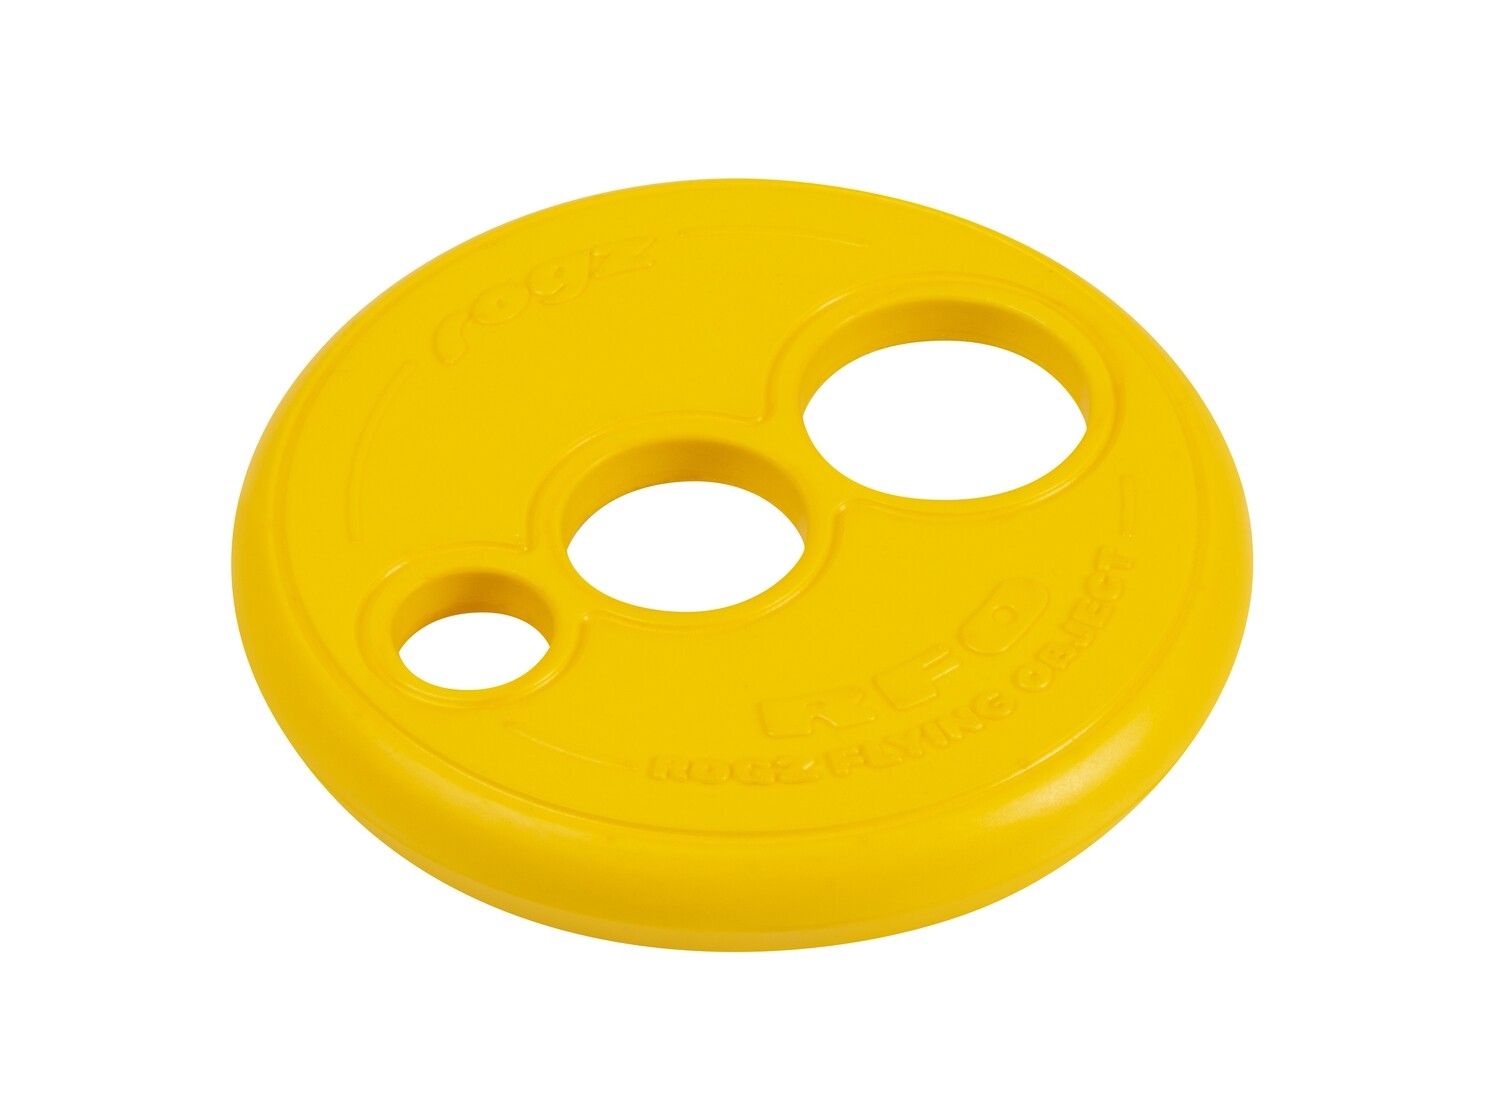 Rogz Yotz RFO Frisbee - Small, Yellow